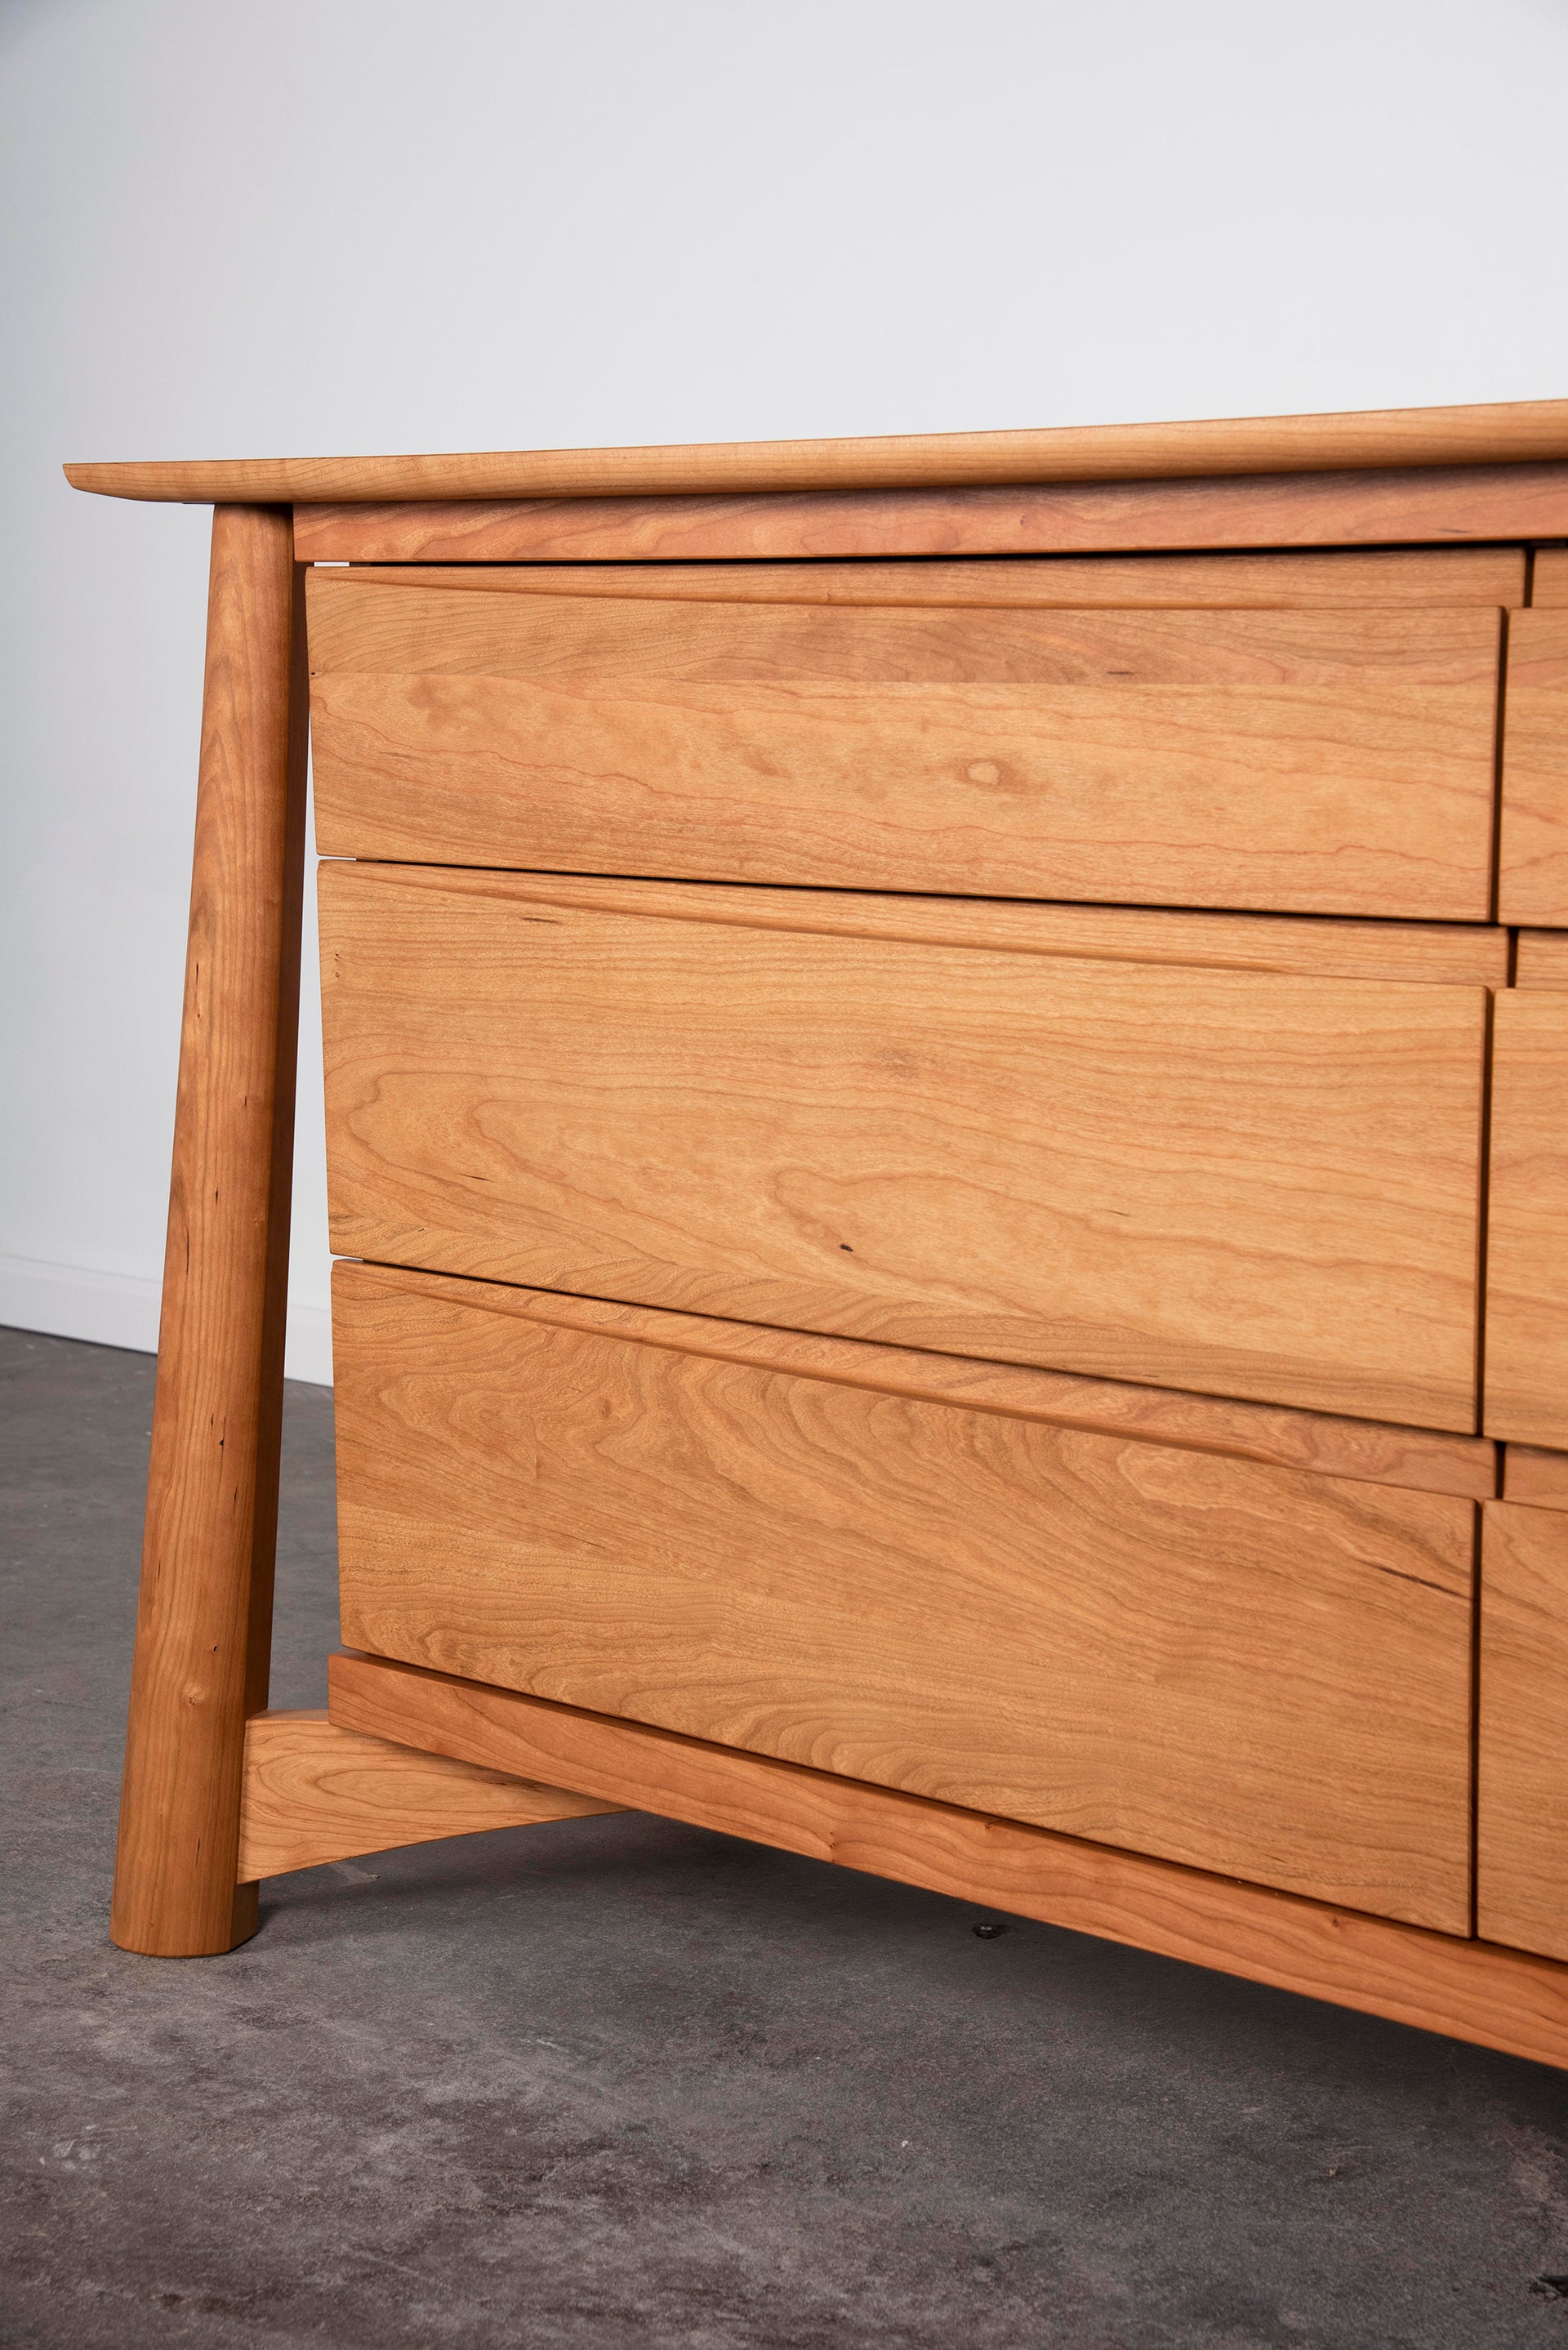 Modern dresser built from natural solid wood